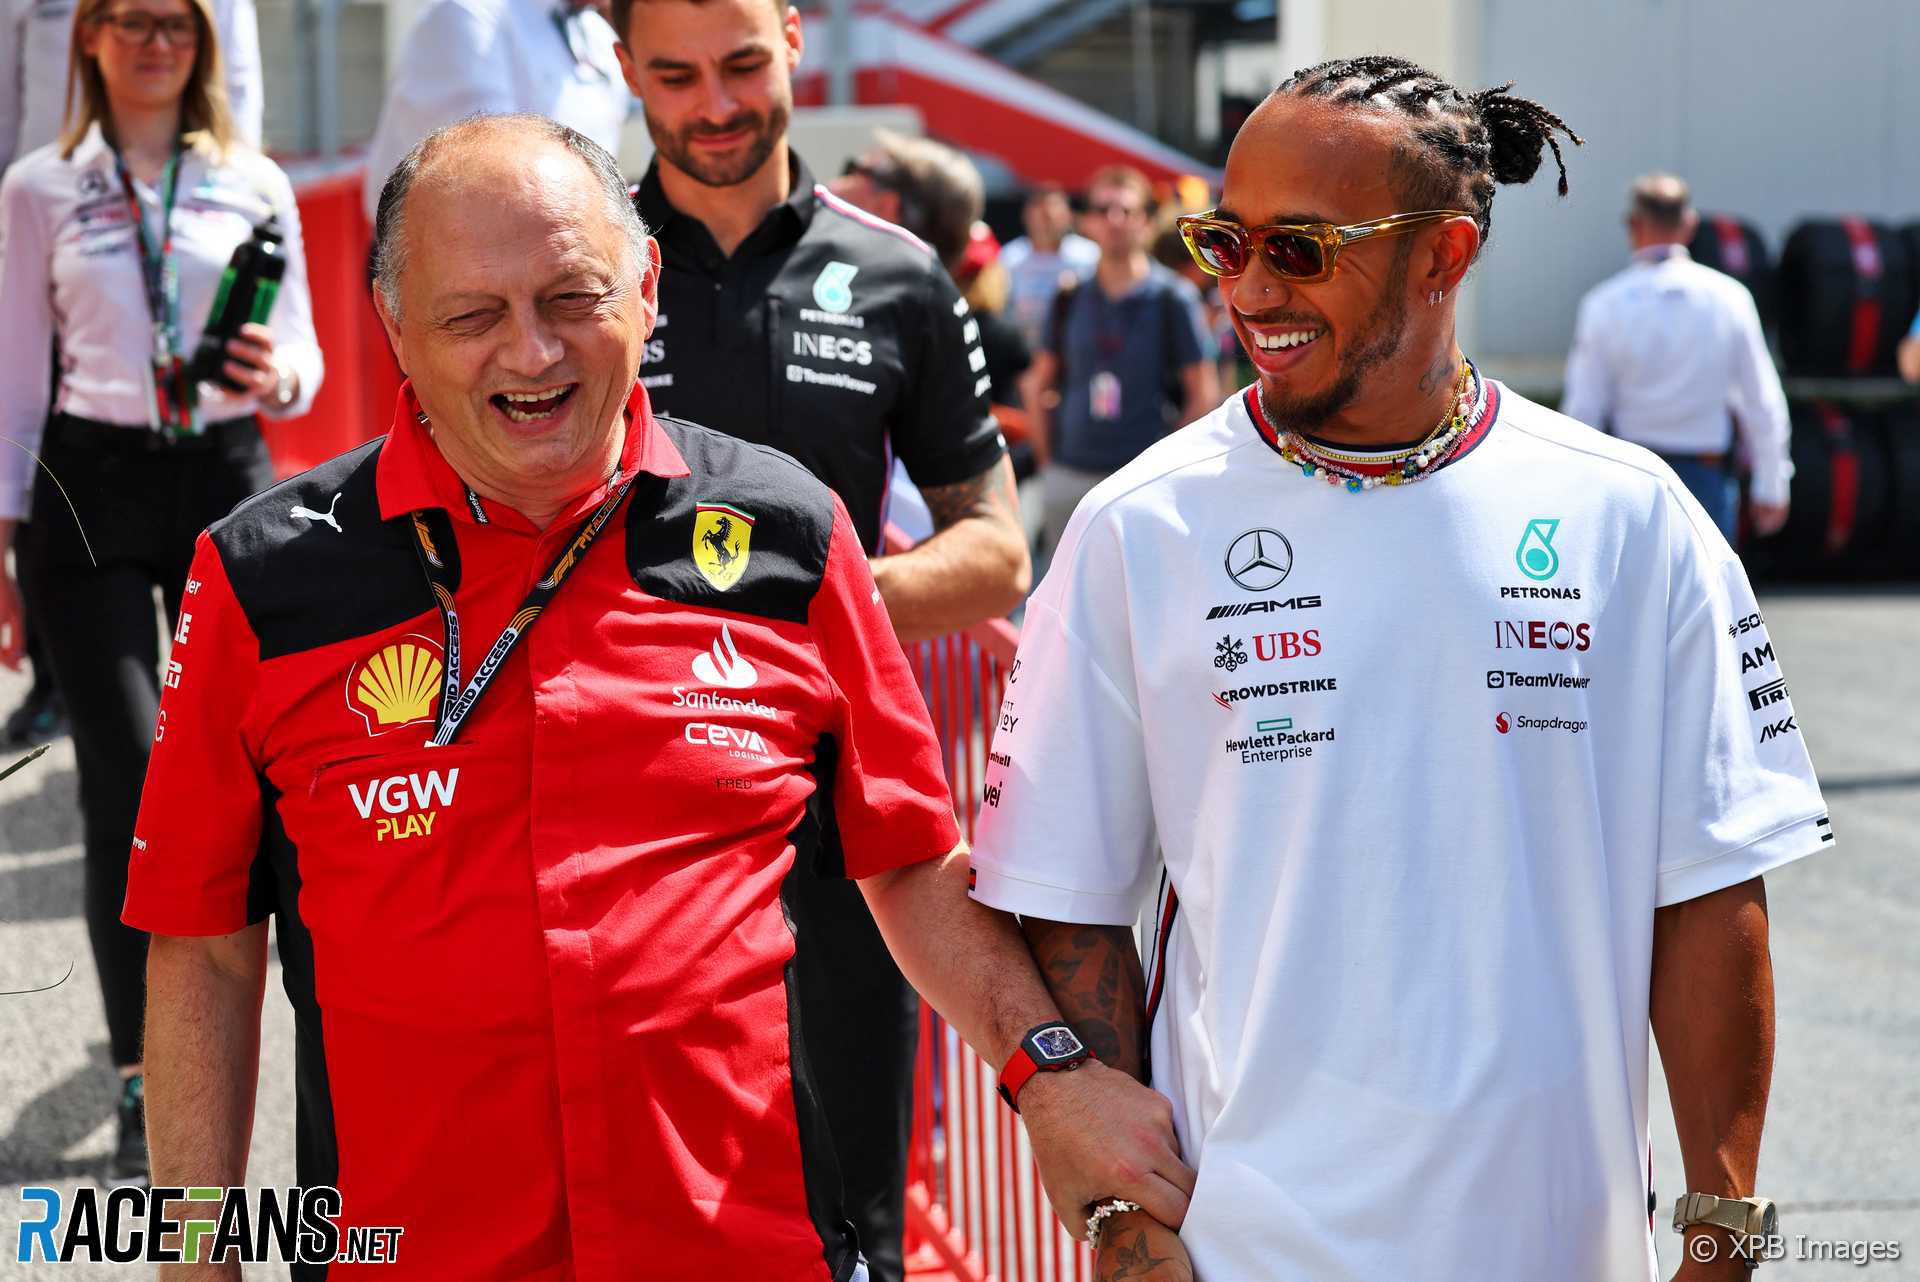 Ferrari neponúklo Hamiltonovi zmluvu, hovorí šéf tímu Vasseur · RaceFans